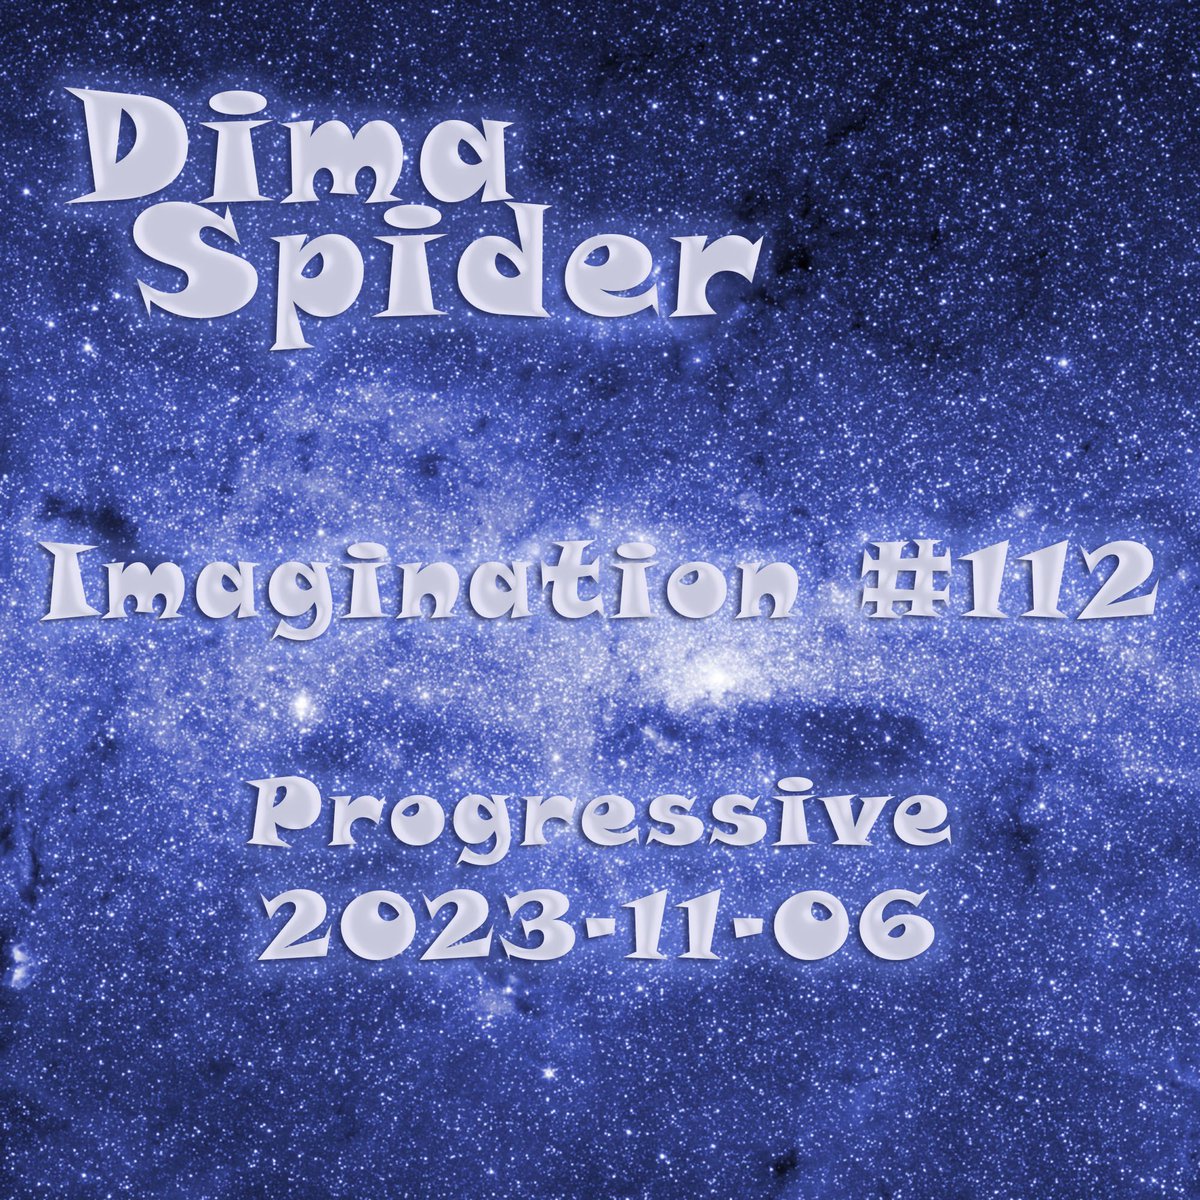 #Progressive and #Melodic #House tracks in my #112 of #Imagination with #JodyWisternoff, #AboveAndBeyond, #FerryCorsten, #NickWarren, #PROFF etc. Dima Spider - Imagination #112 Progressive - 2023-11-06 #promodj #nowplaying play on pdj.cc/Fvzhp & dimaspider.ru